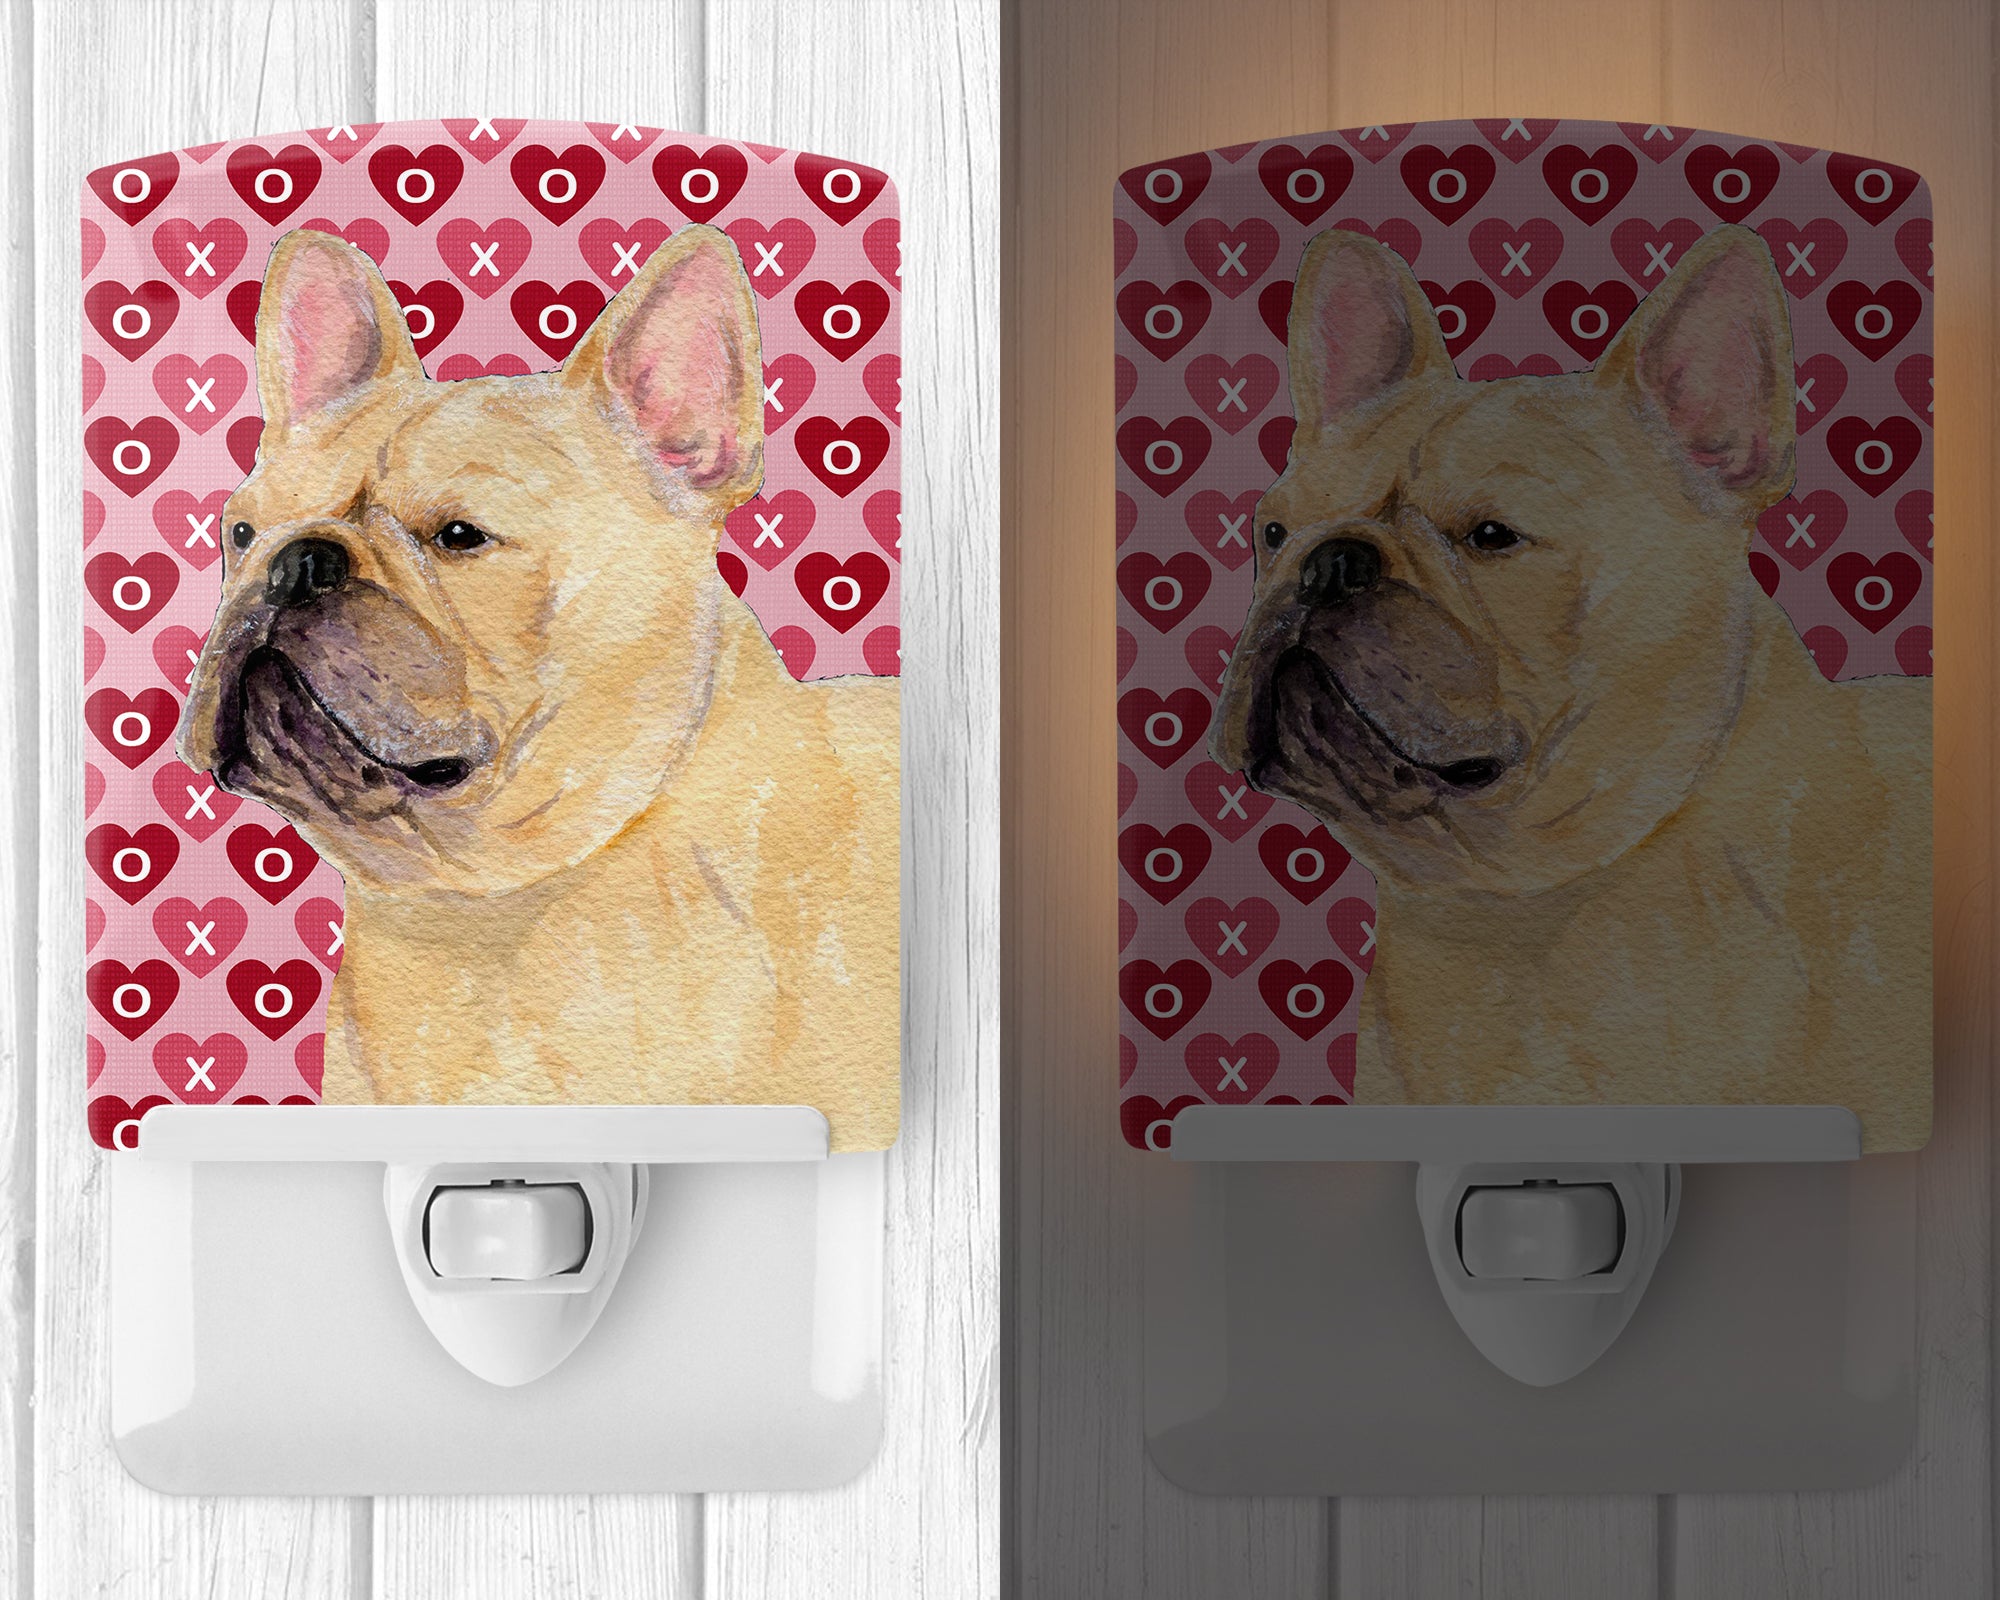 French Bulldog Hearts Love and Valentine's Day Portrait Ceramic Night Light SS4485CNL - the-store.com